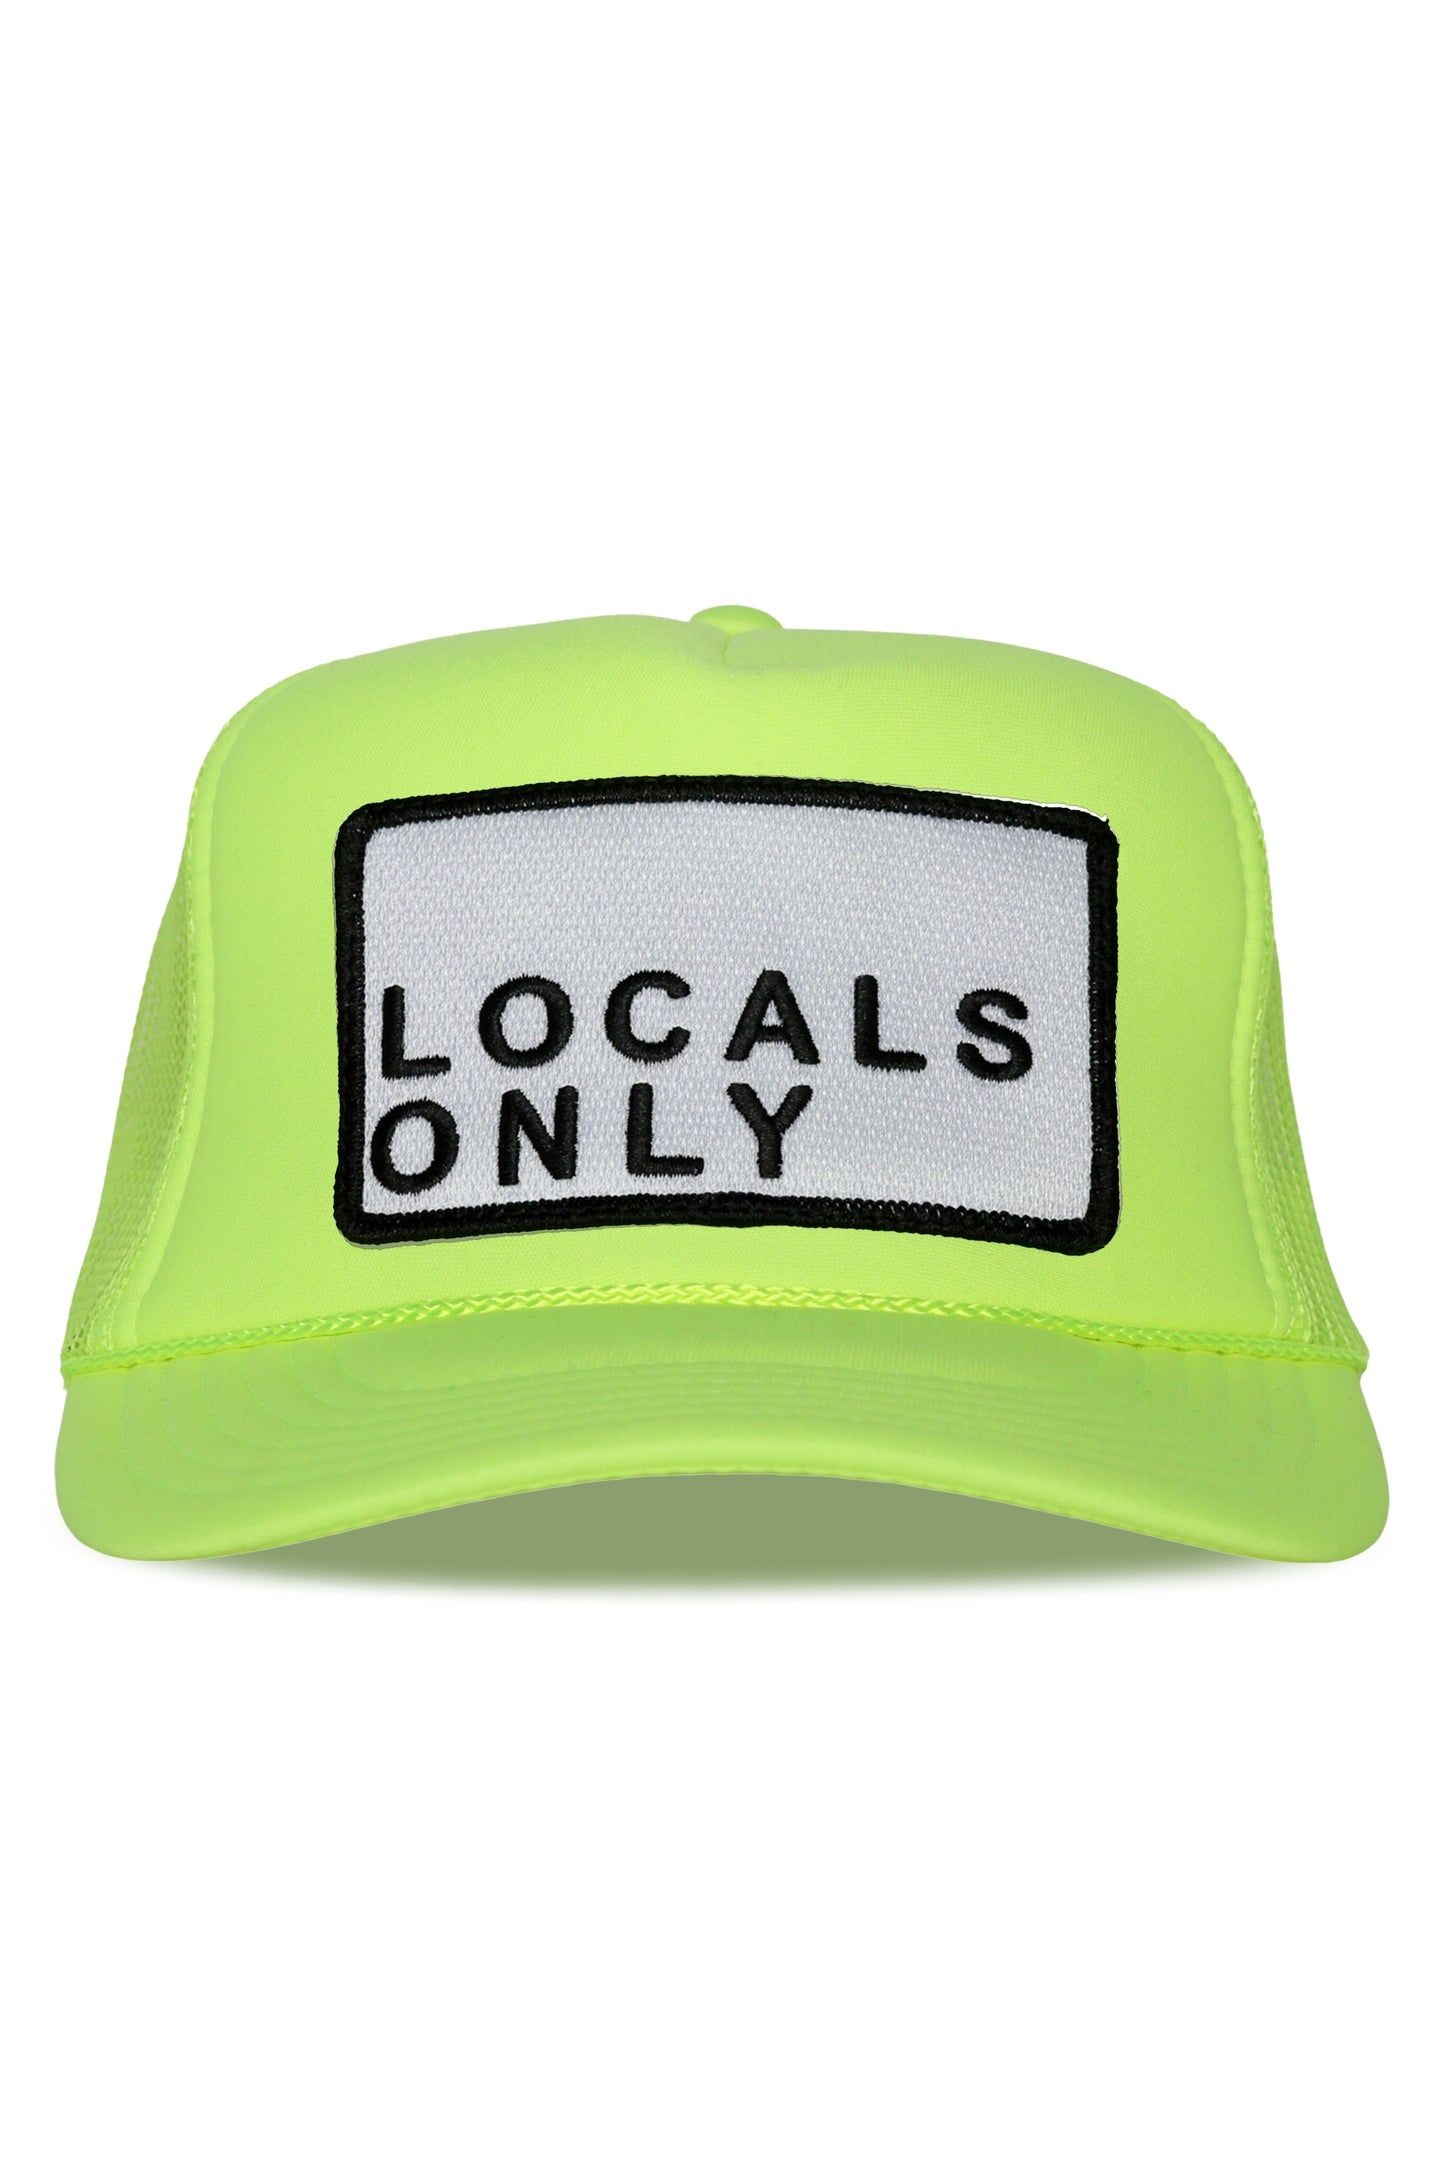 Locals Only- Neon